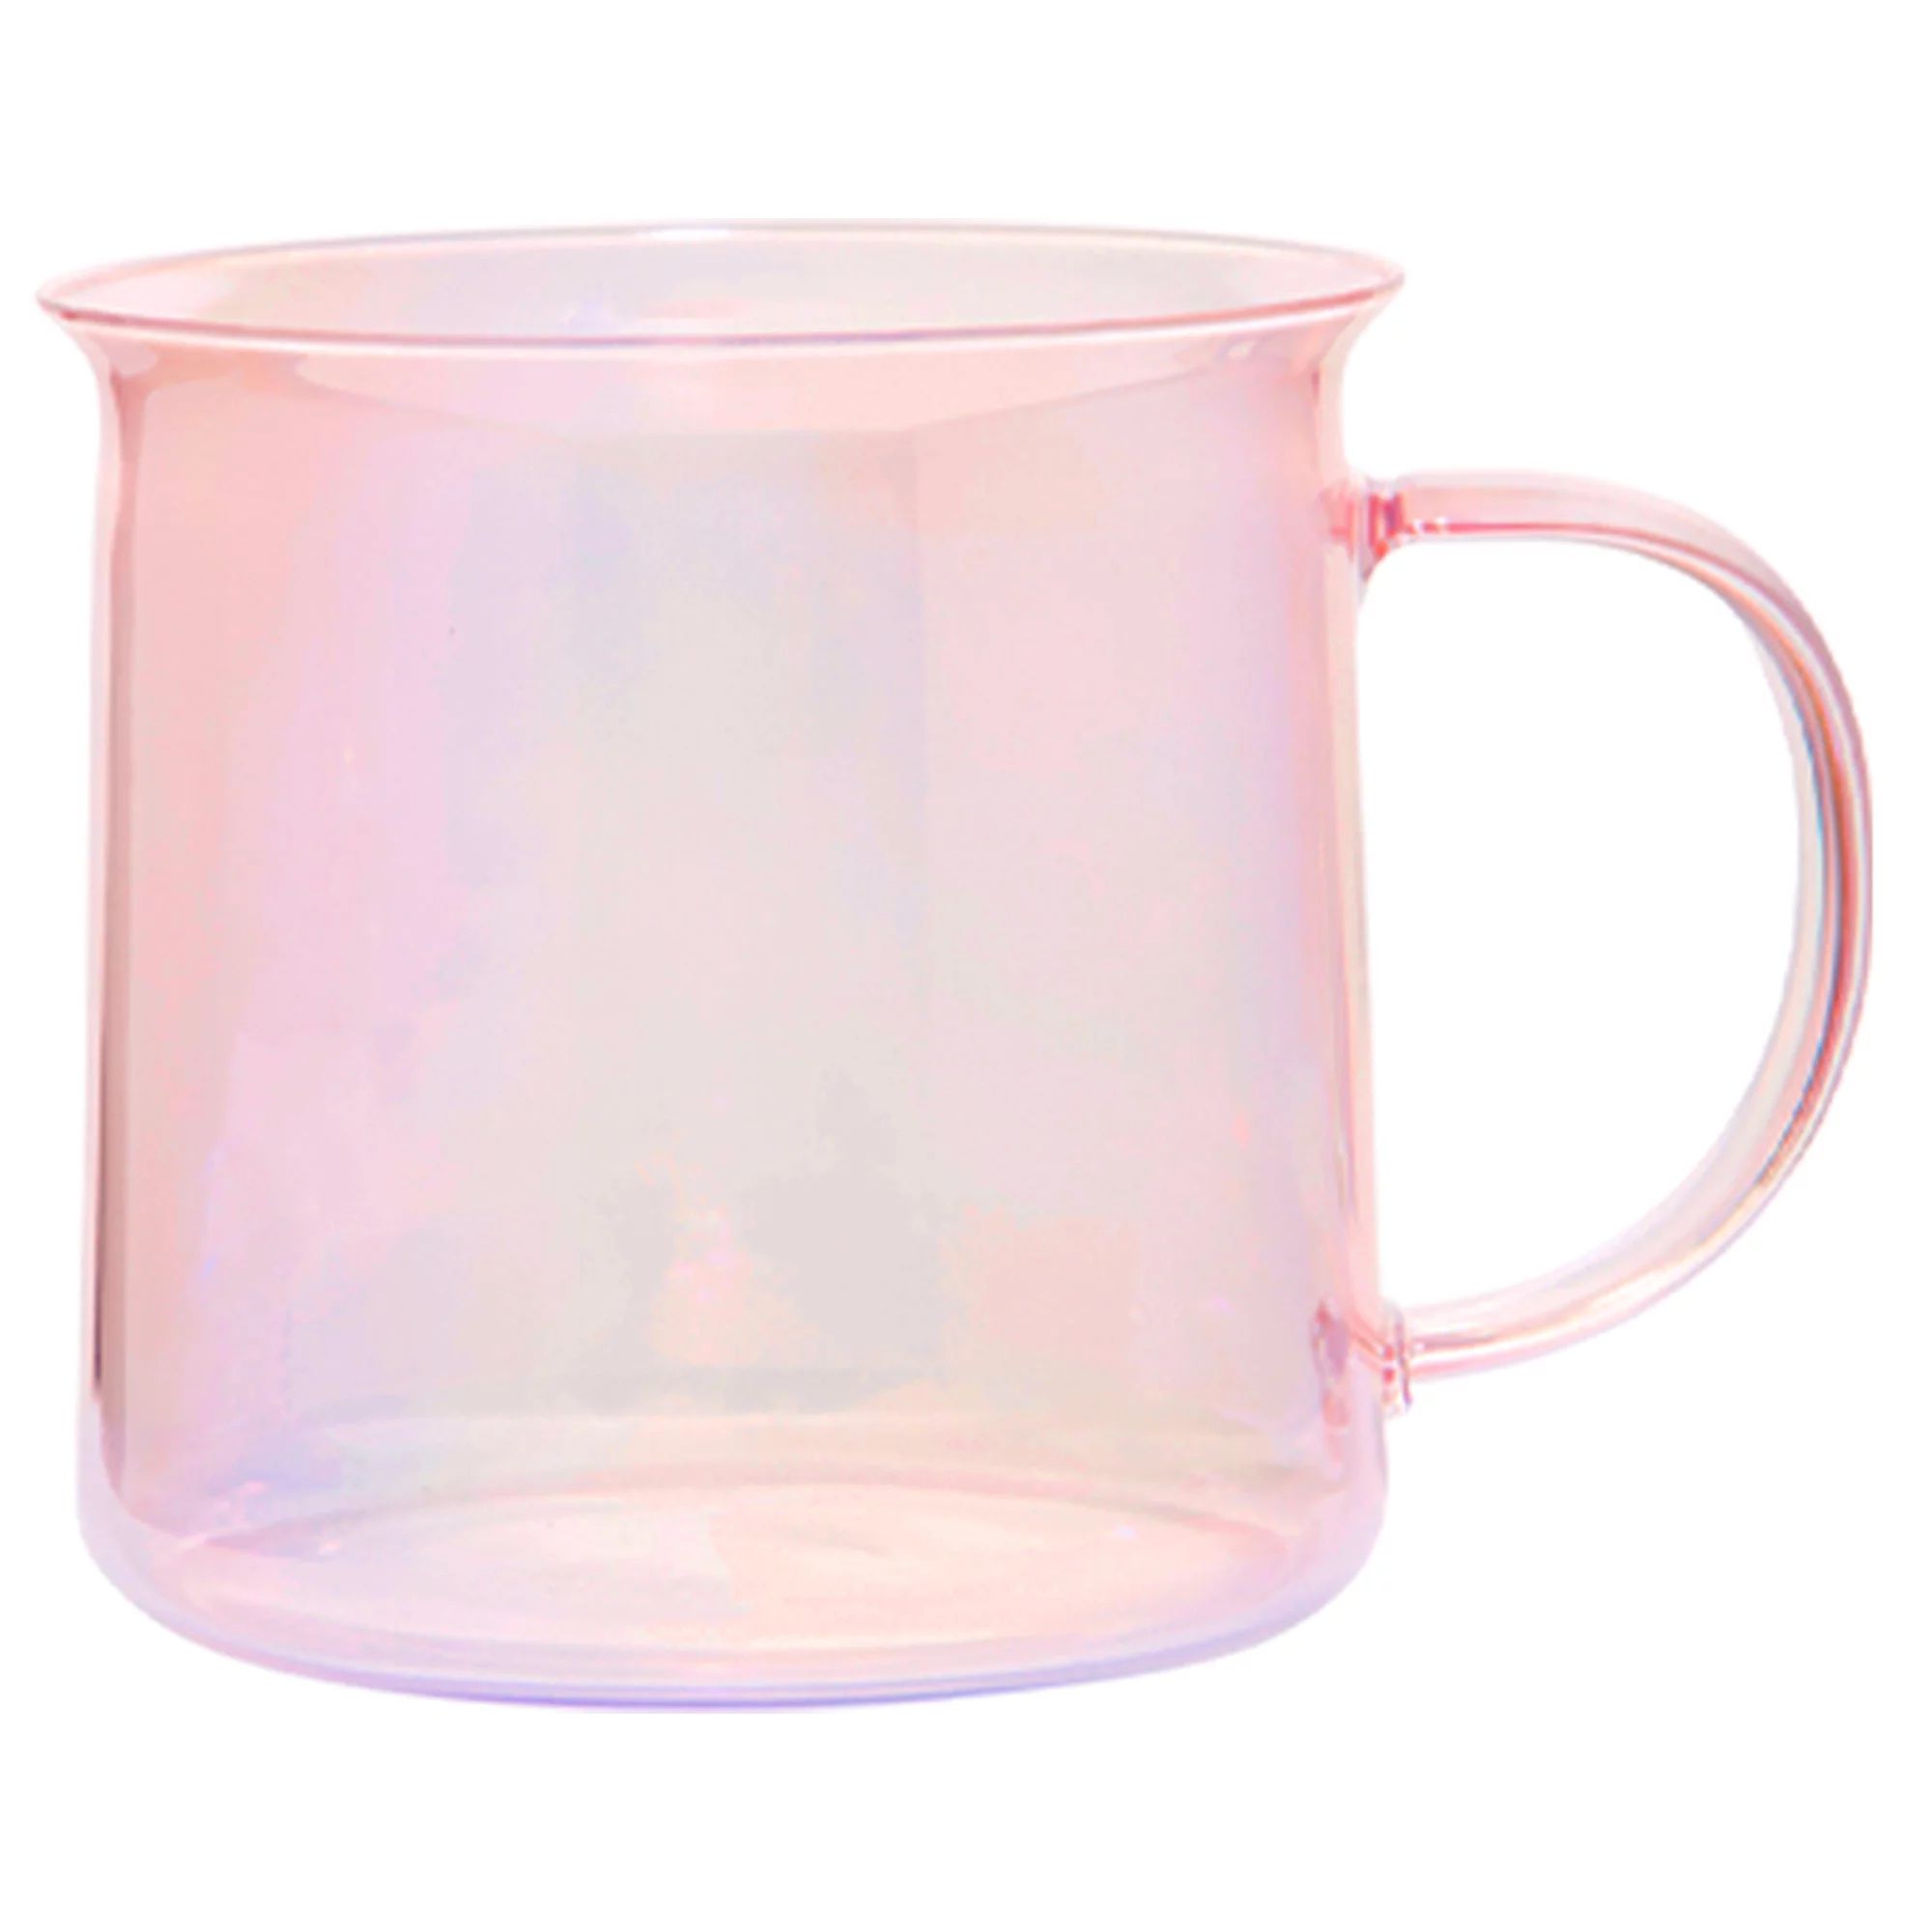 Mainstays Pink Camp Glass 18 fl oz Mug, Heat-Resistant Borosilicate Glass | Walmart (US)